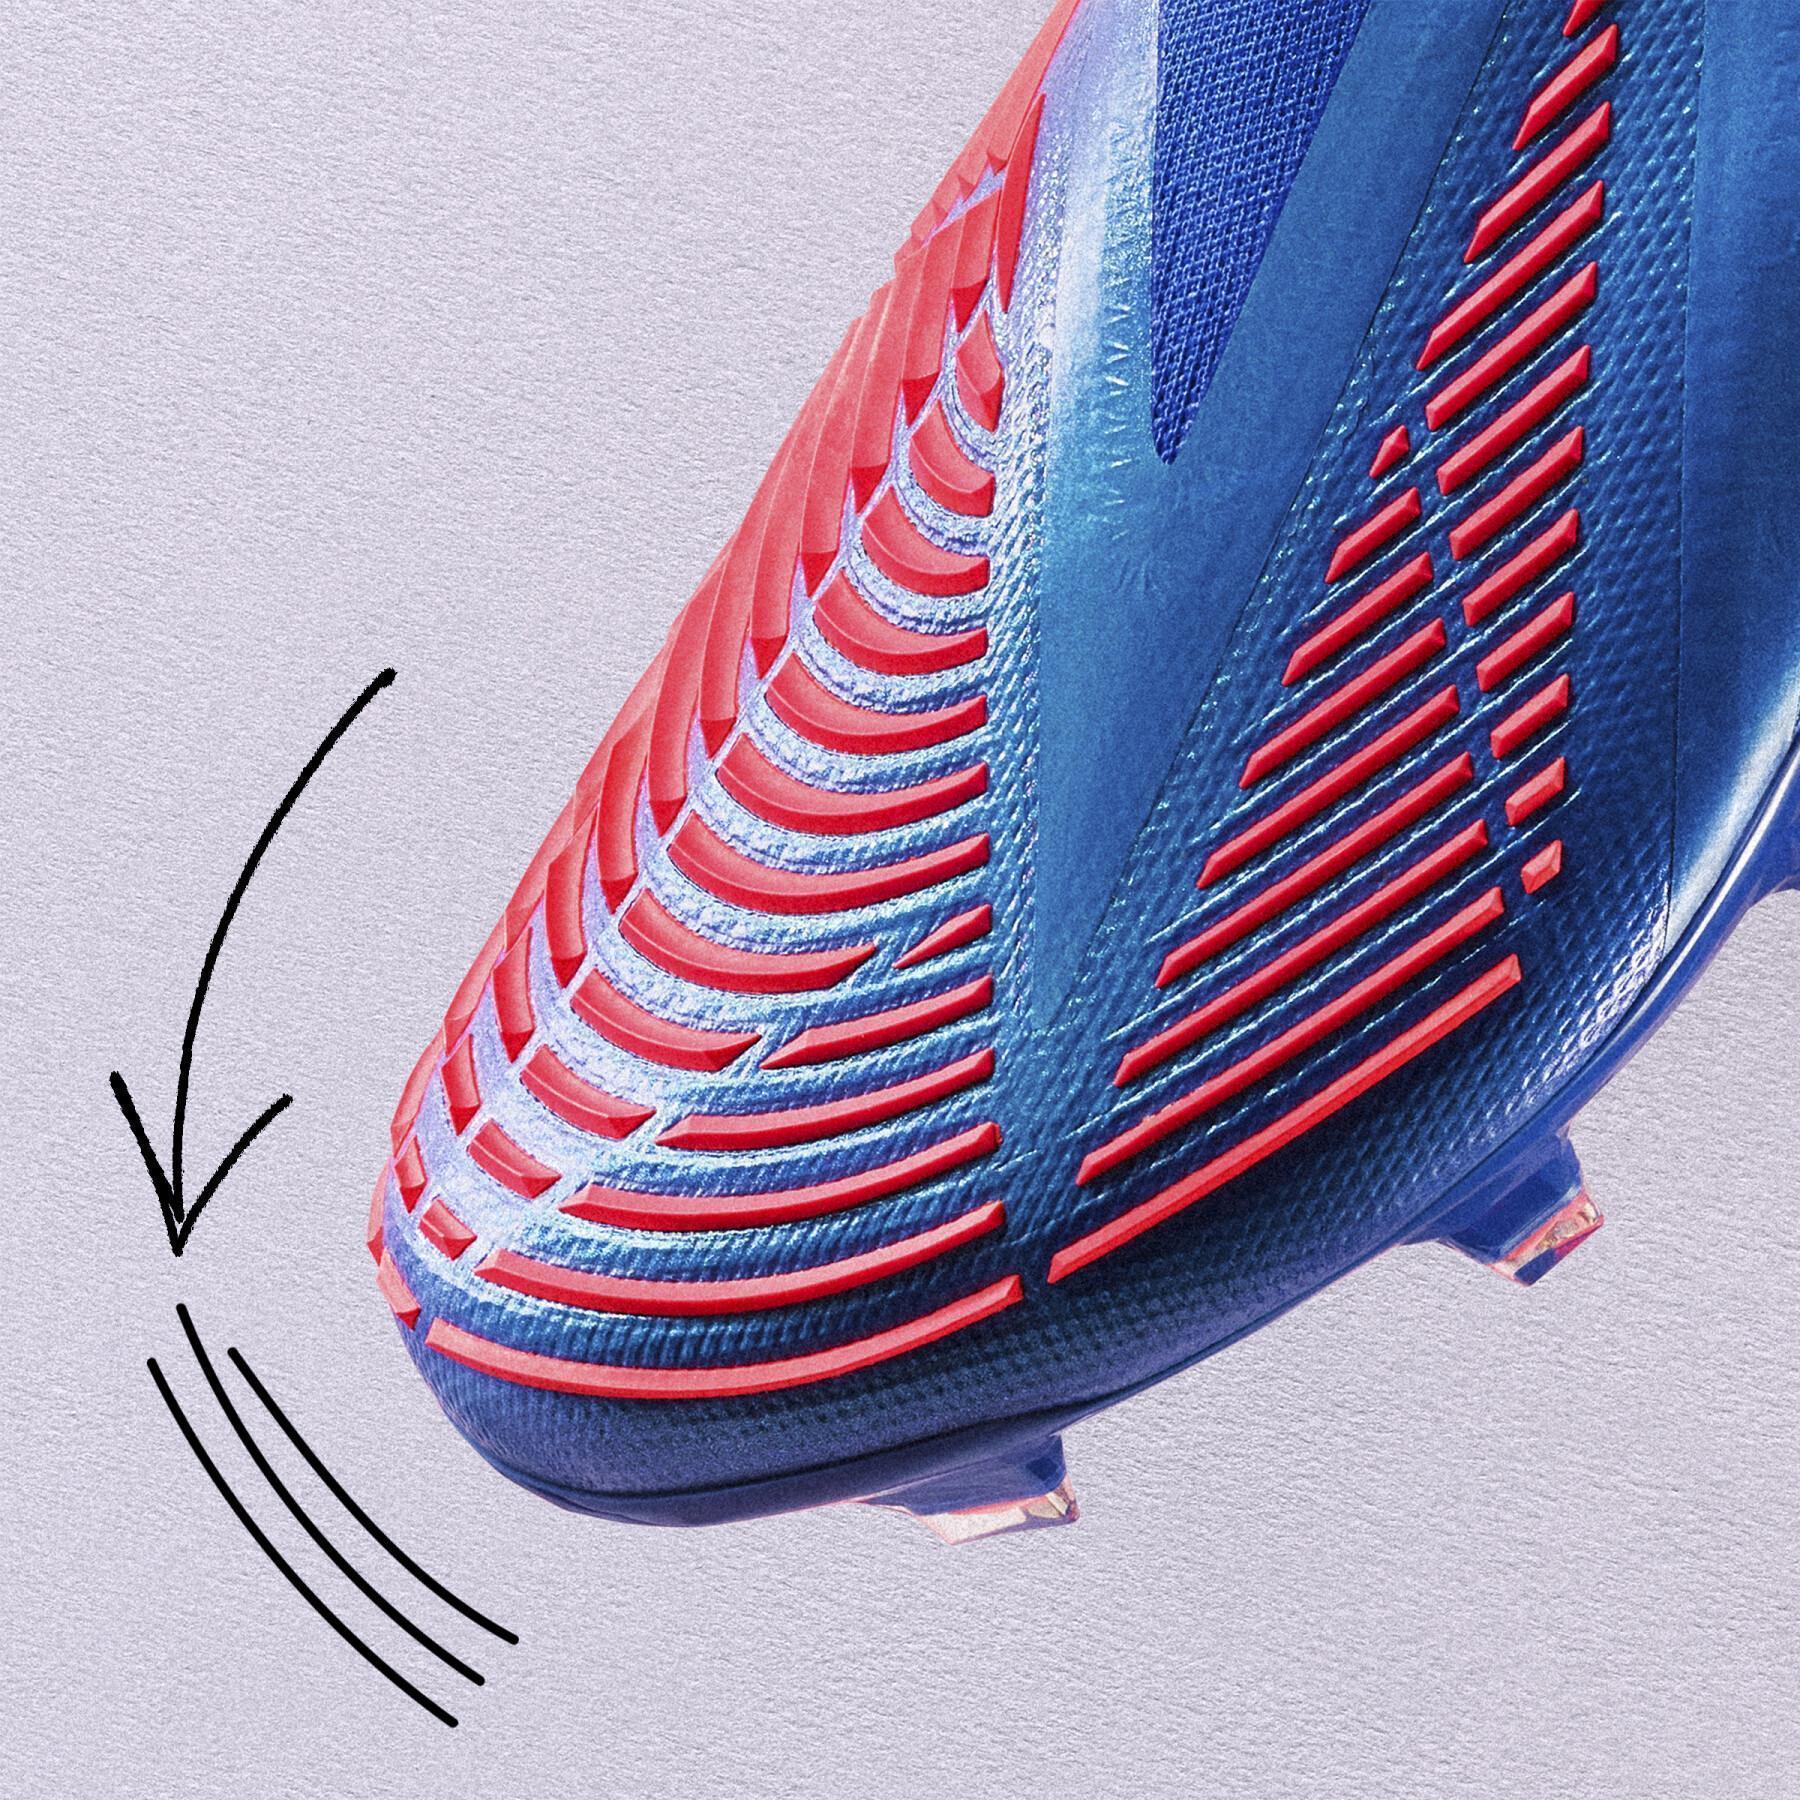 Scarpe da calcio adidas Predator Edge+ FG - Sapphire Edge Pack